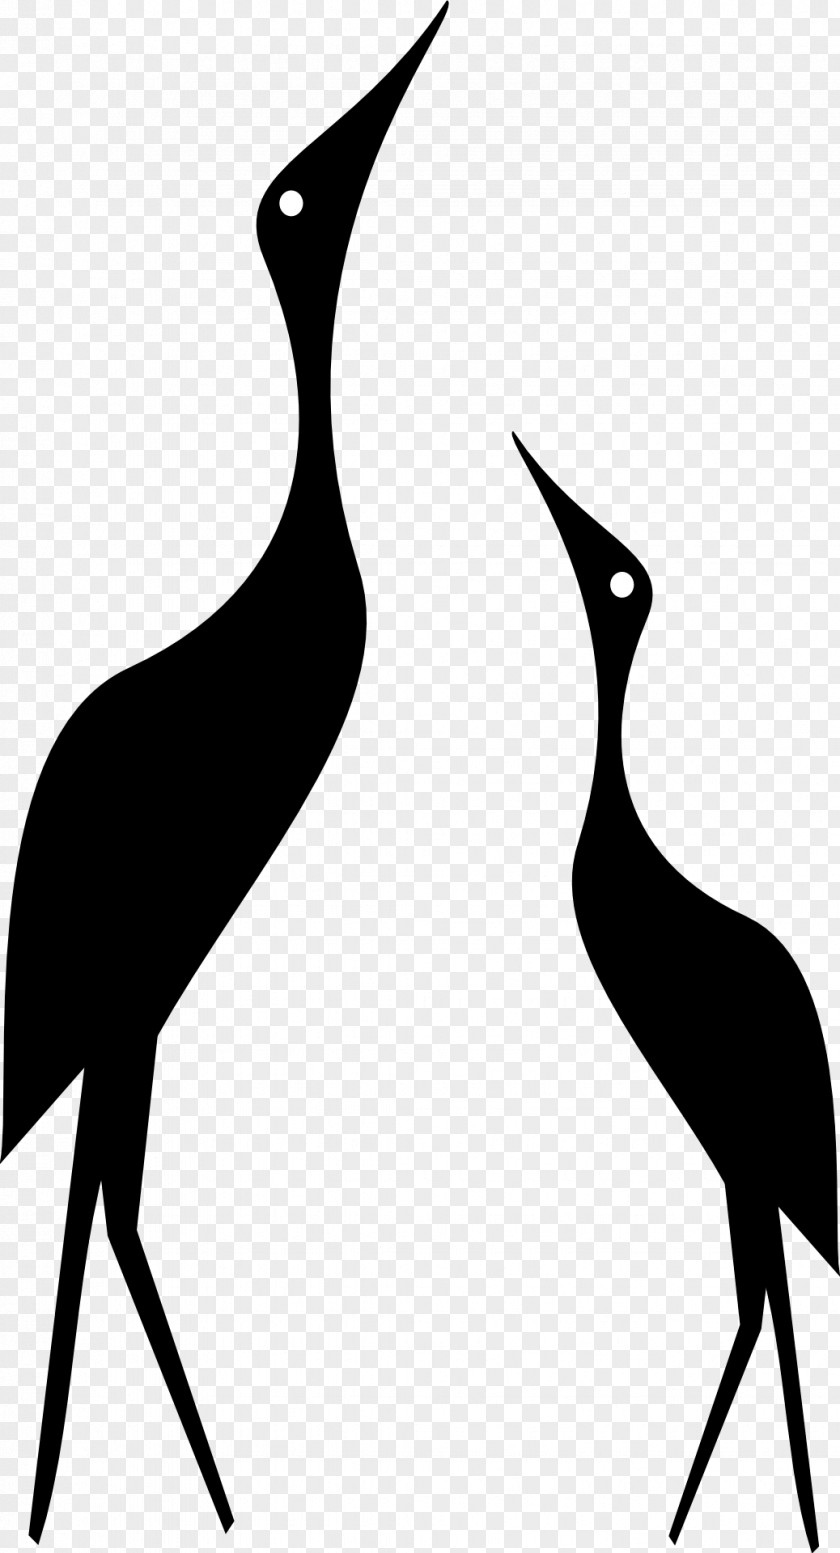 Water Bird Crane Silhouette PNG